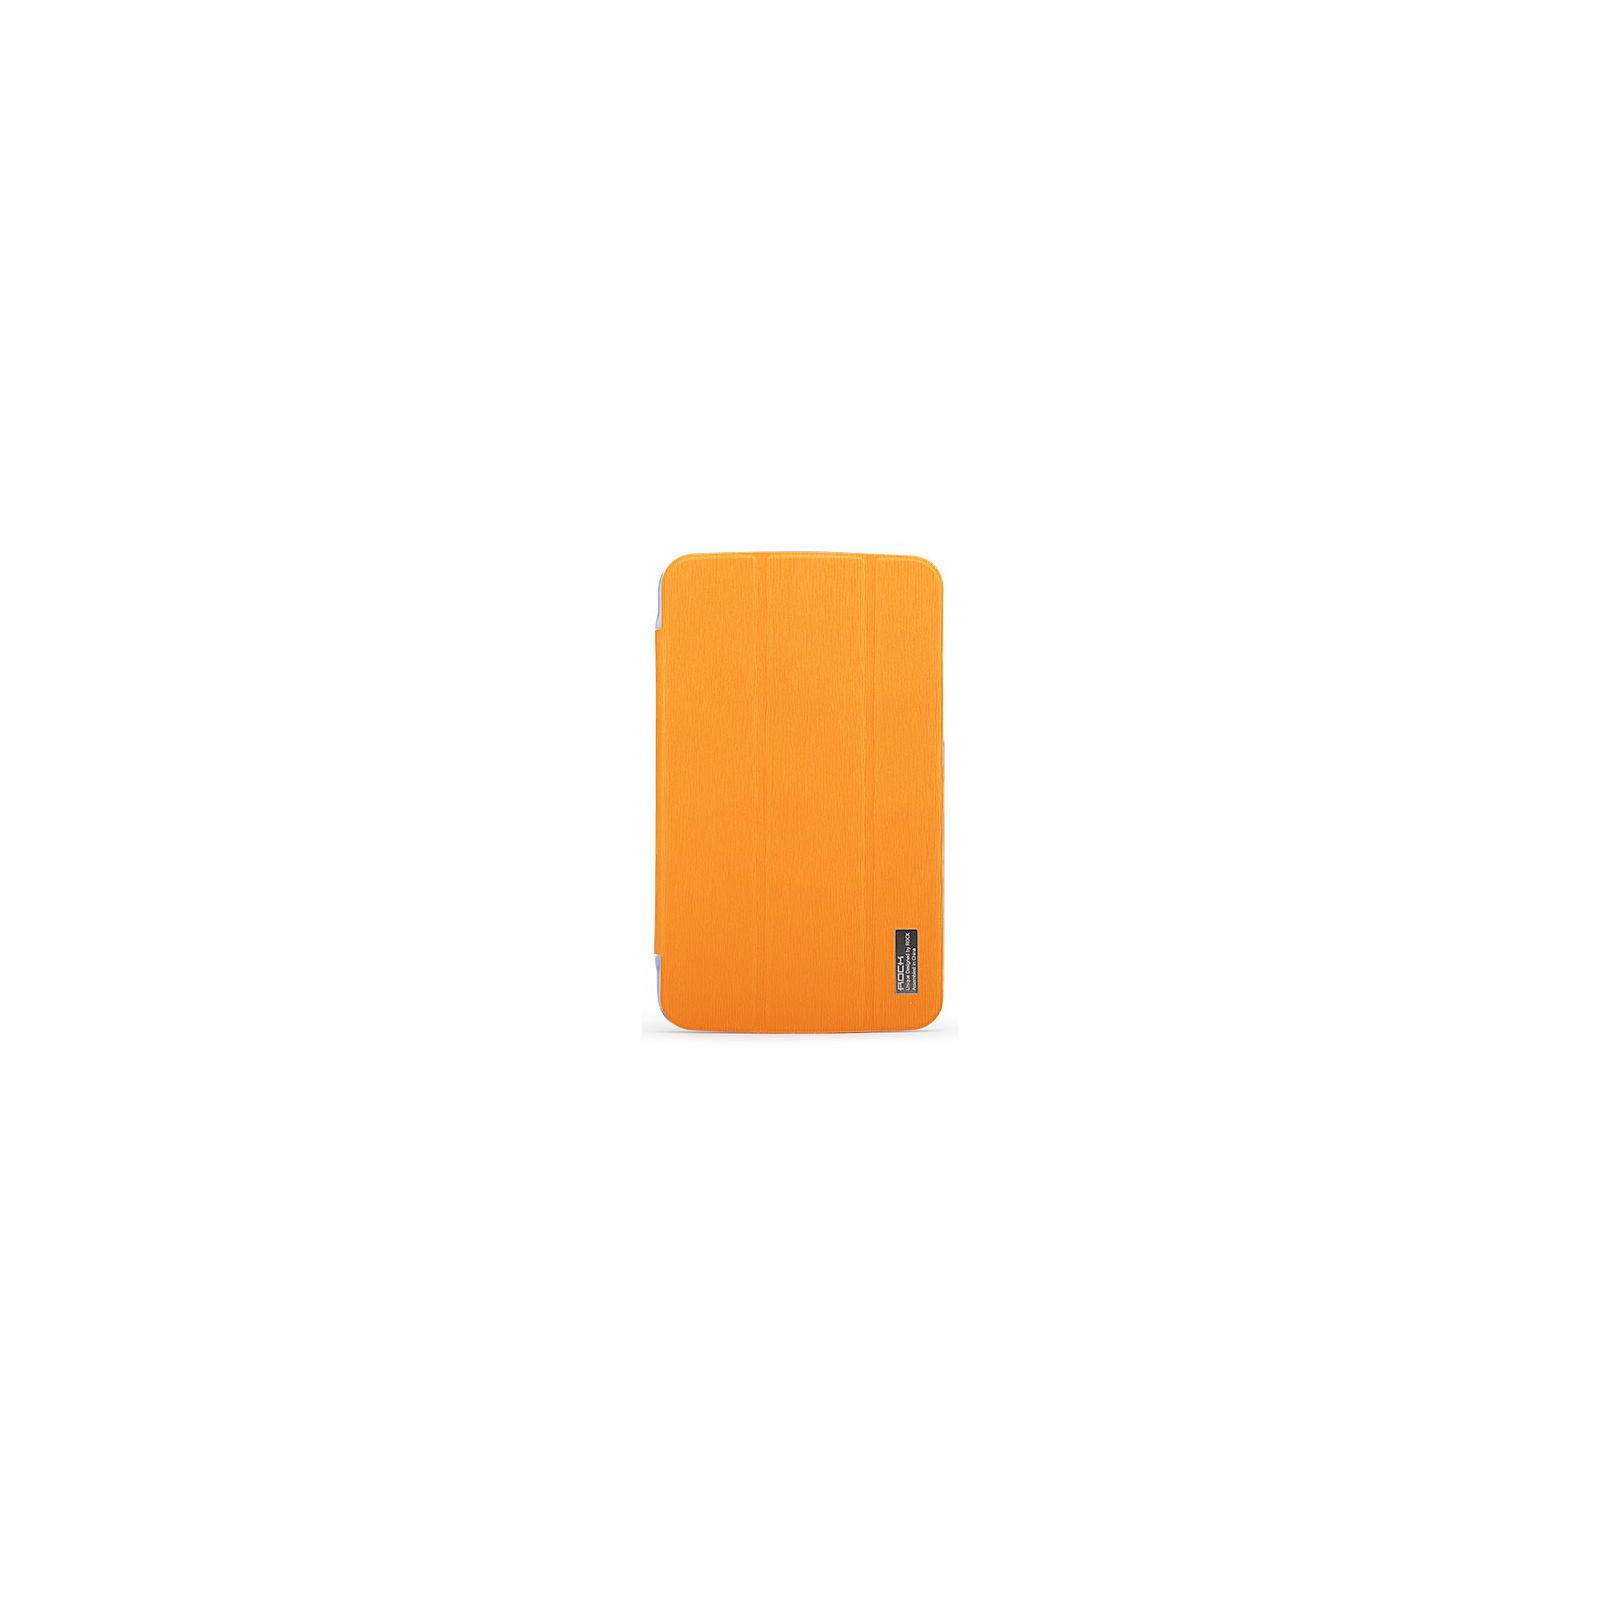 Чехол для планшета Rock Samsung Galaxy Tab3 7" new elegant series orange (T2100-31863)